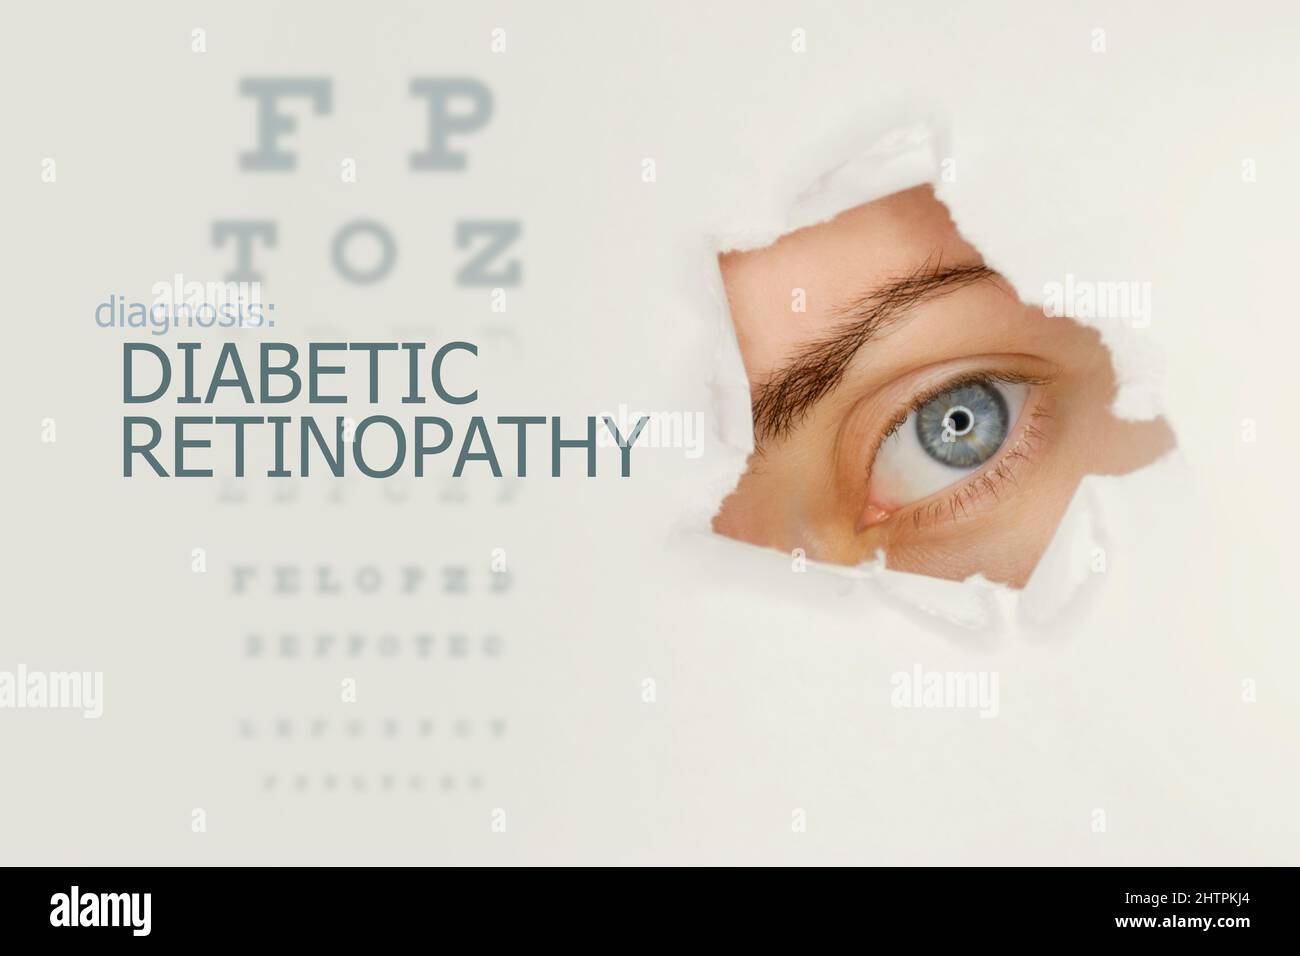 Diabetic retinopathy disease poster with eye test chart and blue eye.Studio grey background Stock Photo